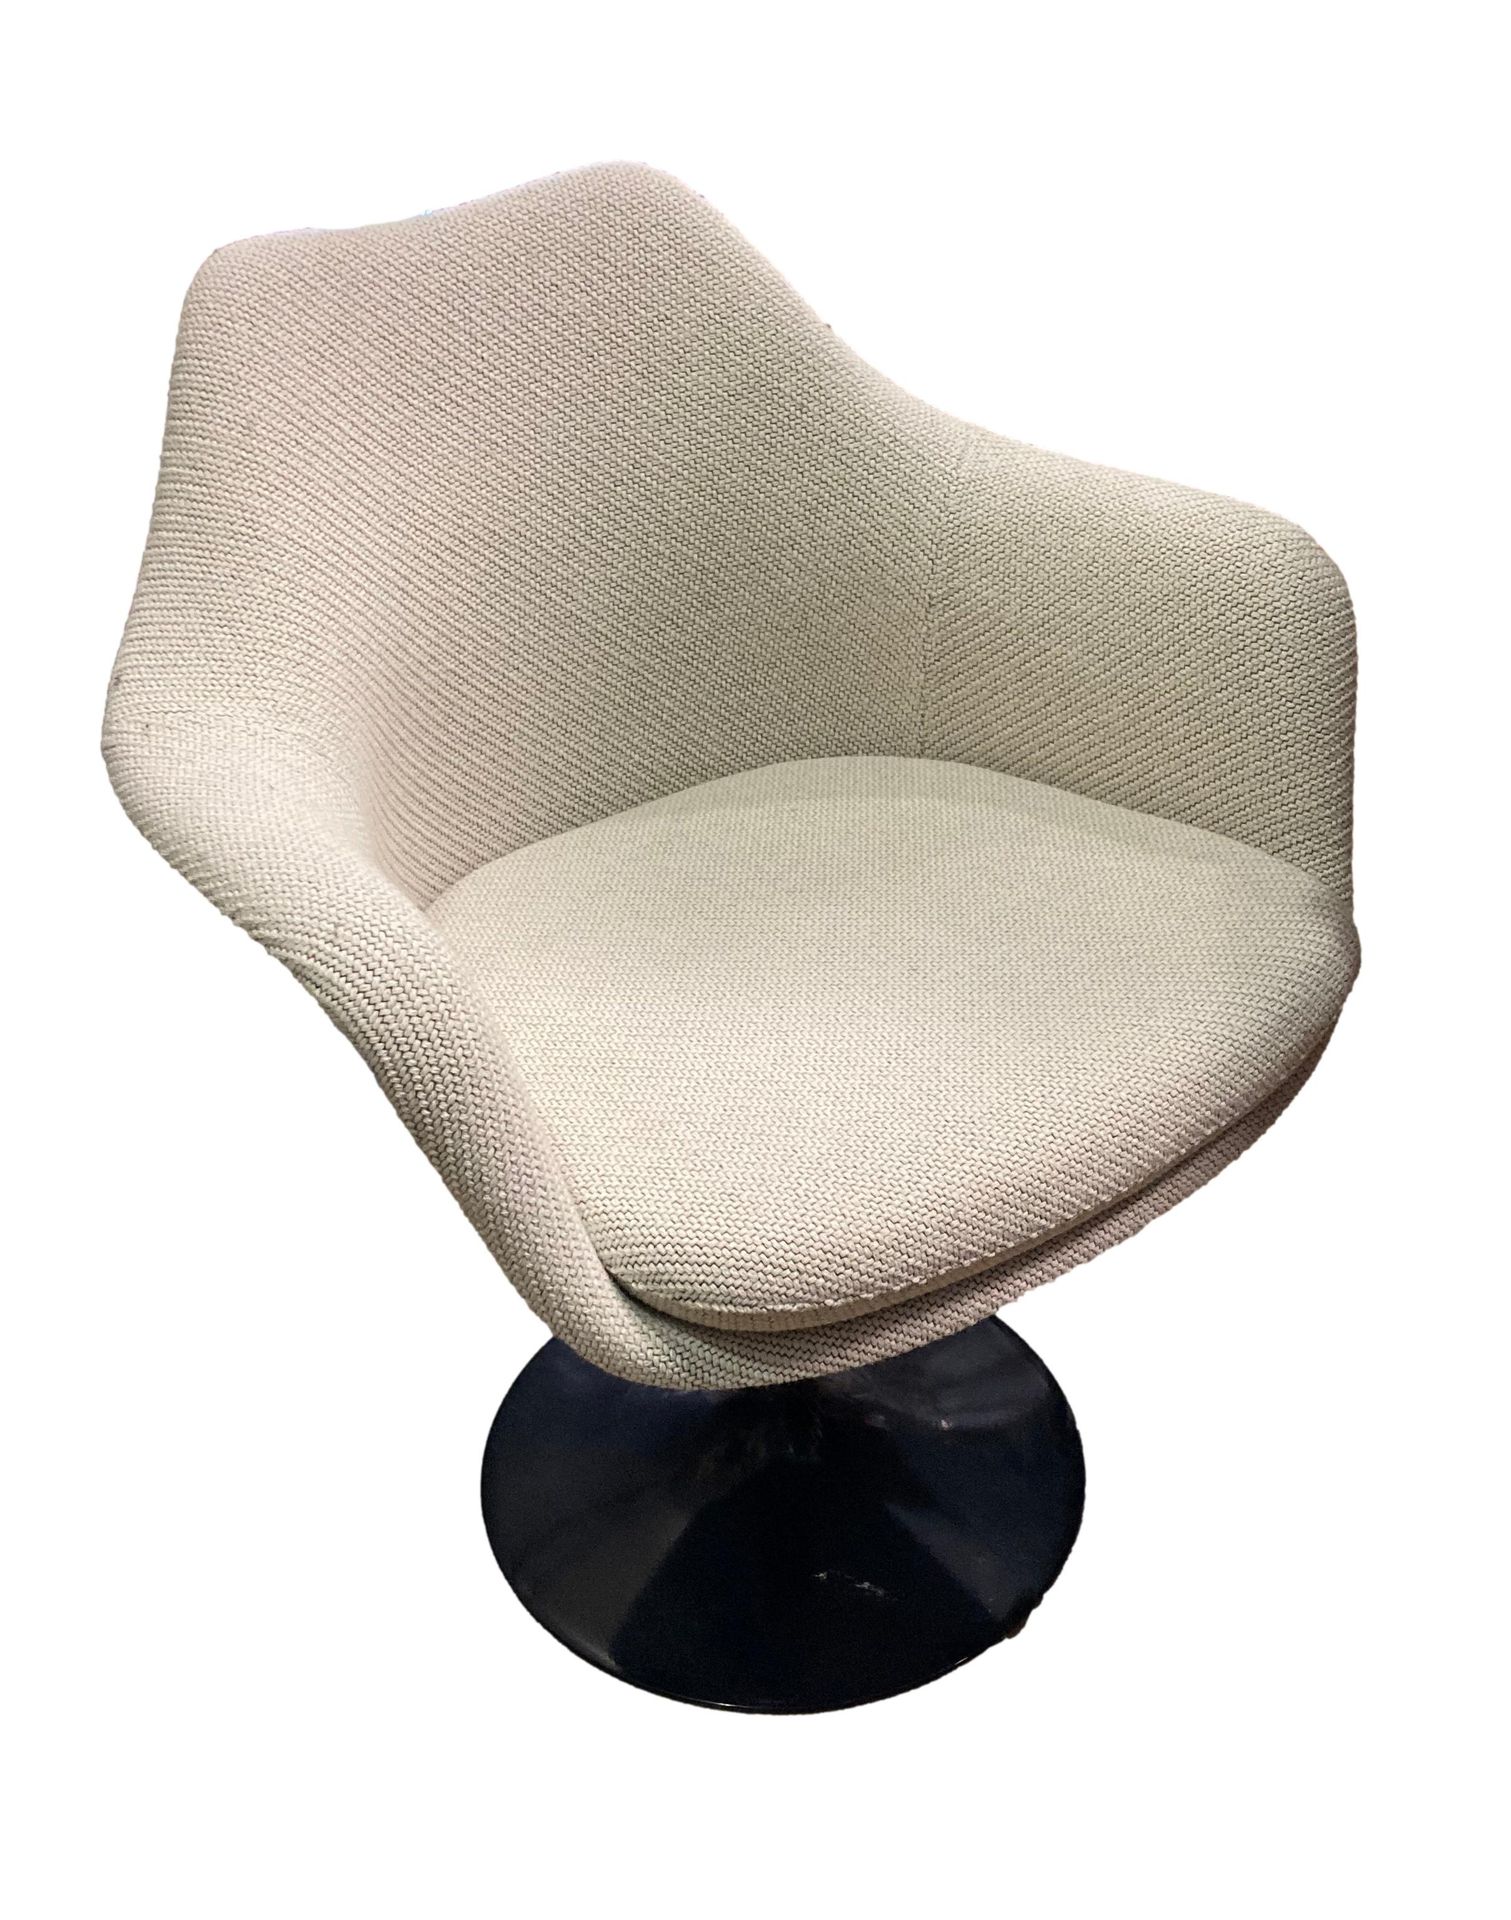 Null Eero SAARINEN (1910-1961) After
Tulip
Fabric-covered fiberglass armchair, b&hellip;